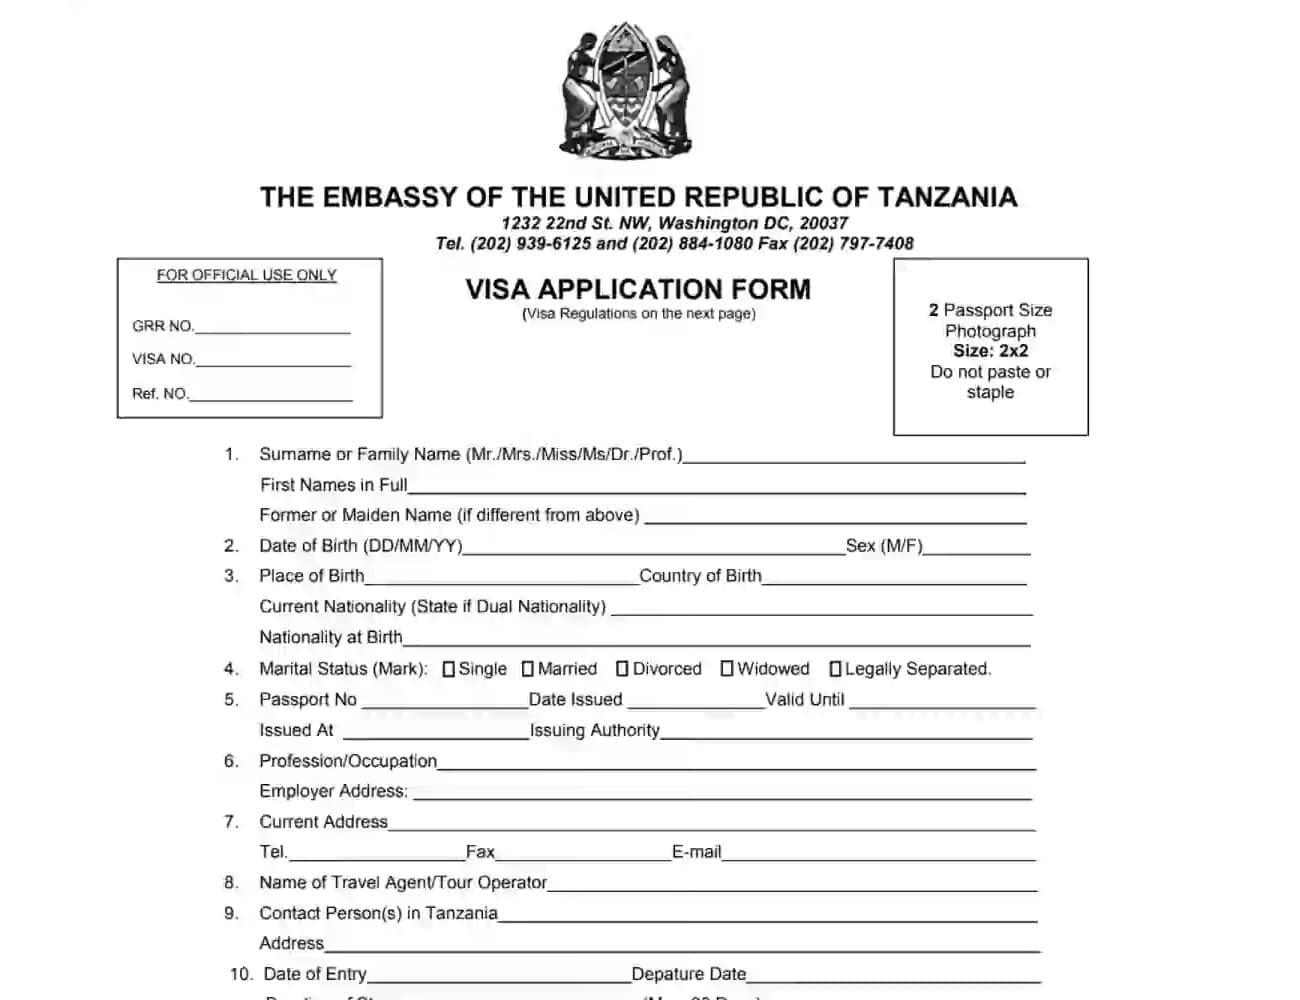 United Republic of Tanzania Visa Application Form